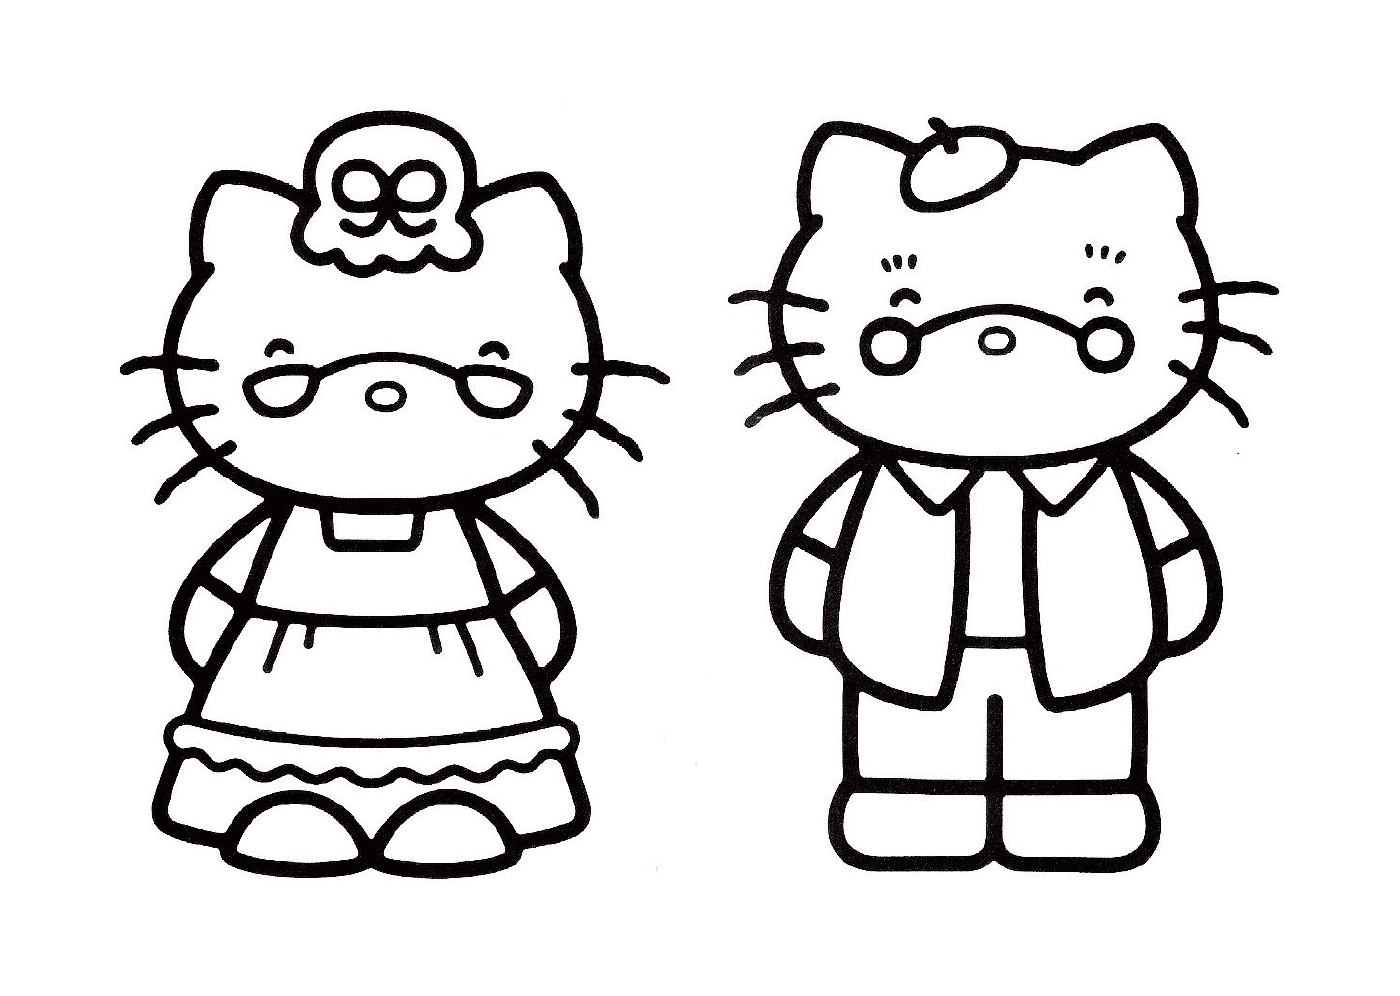  Zwei Hello Kitty Charaktere 